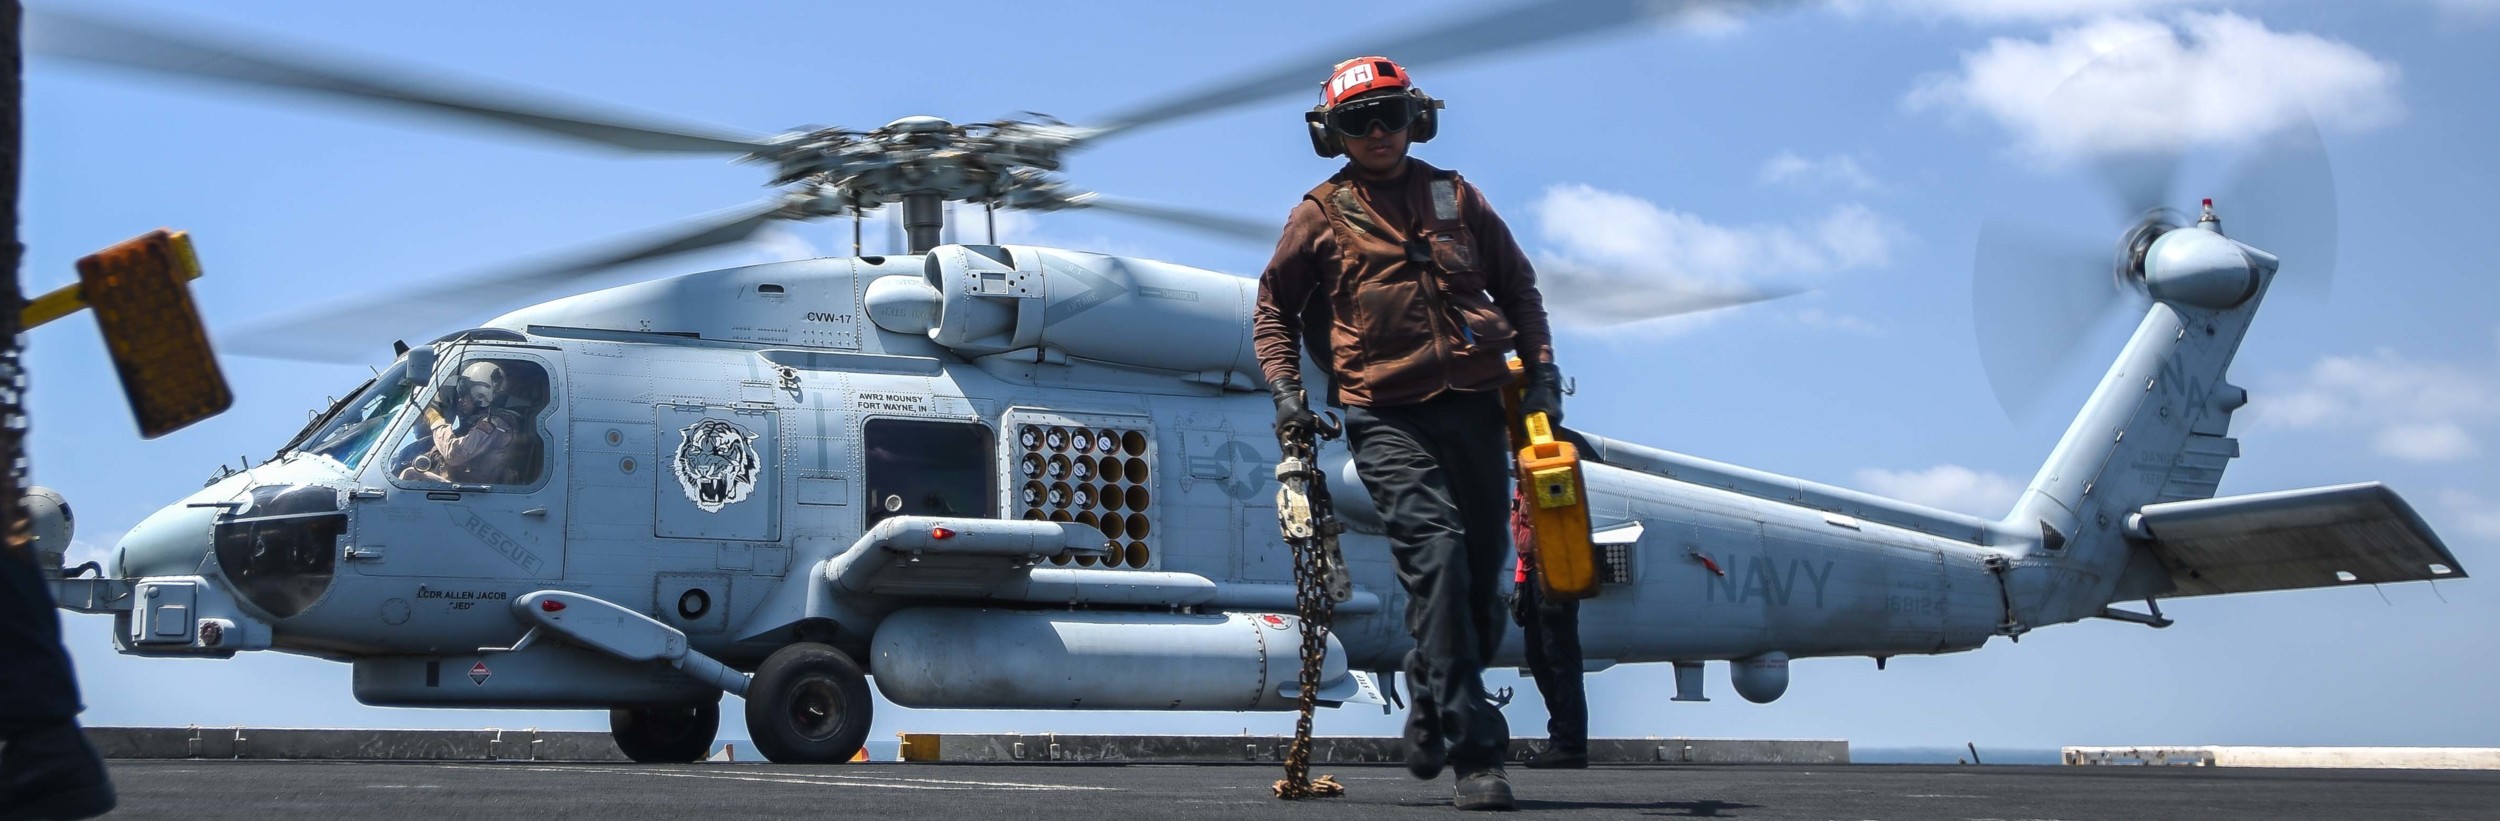 hsm-73 battlecats helicopter maritime strike squadron mh-60r seahawk cvw-17 cvn-71 uss theodore roosevelt 27